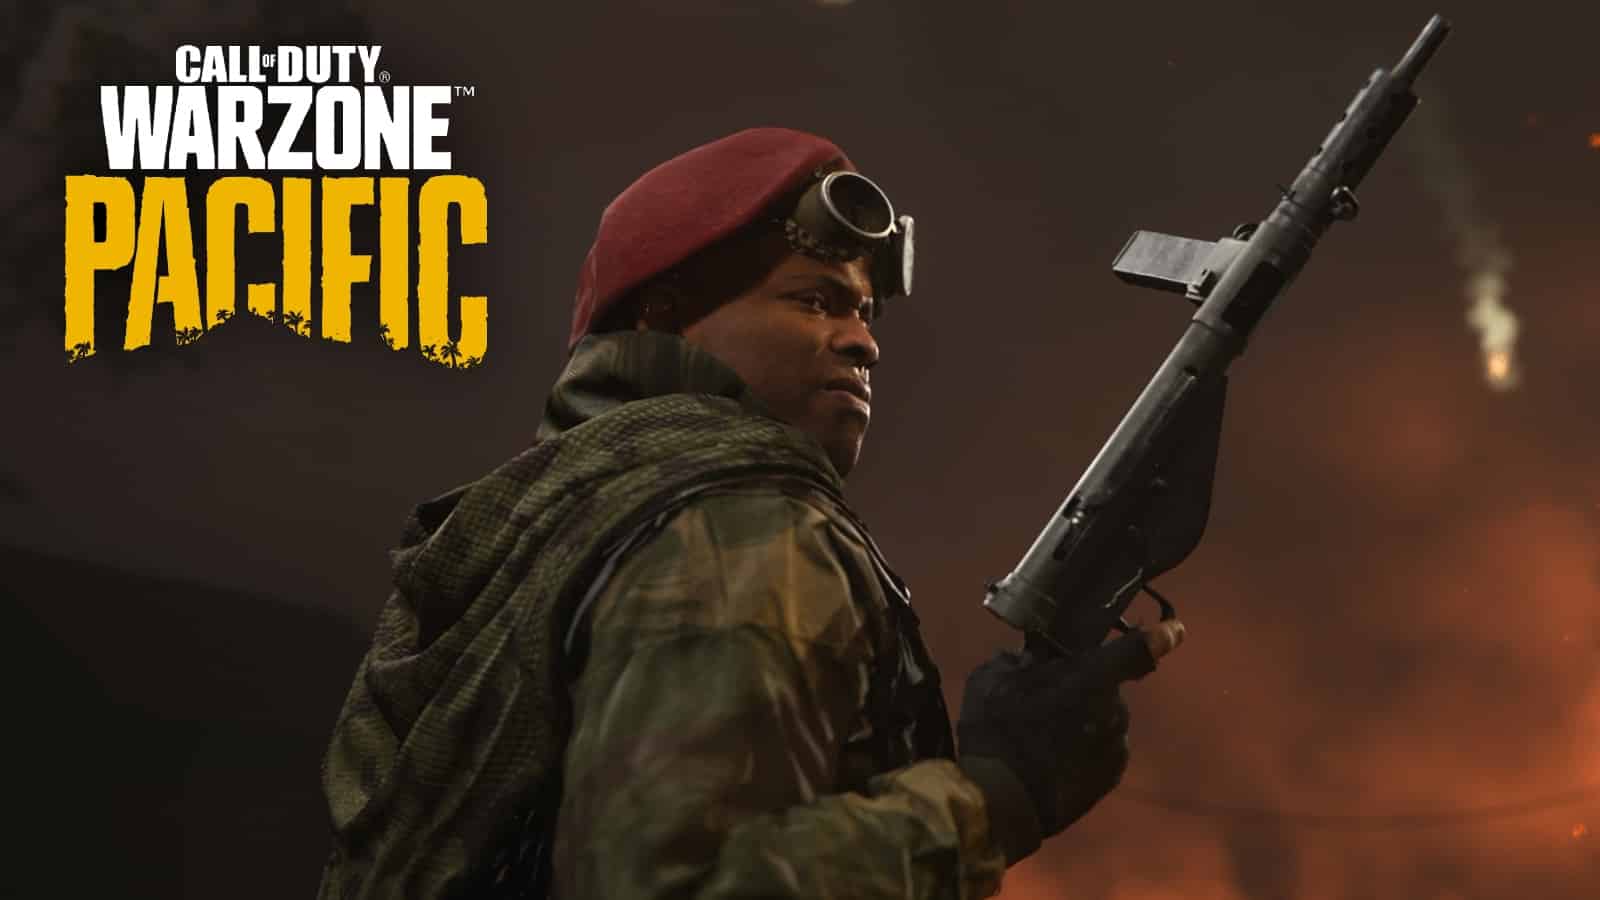 Warzone operator holding gun